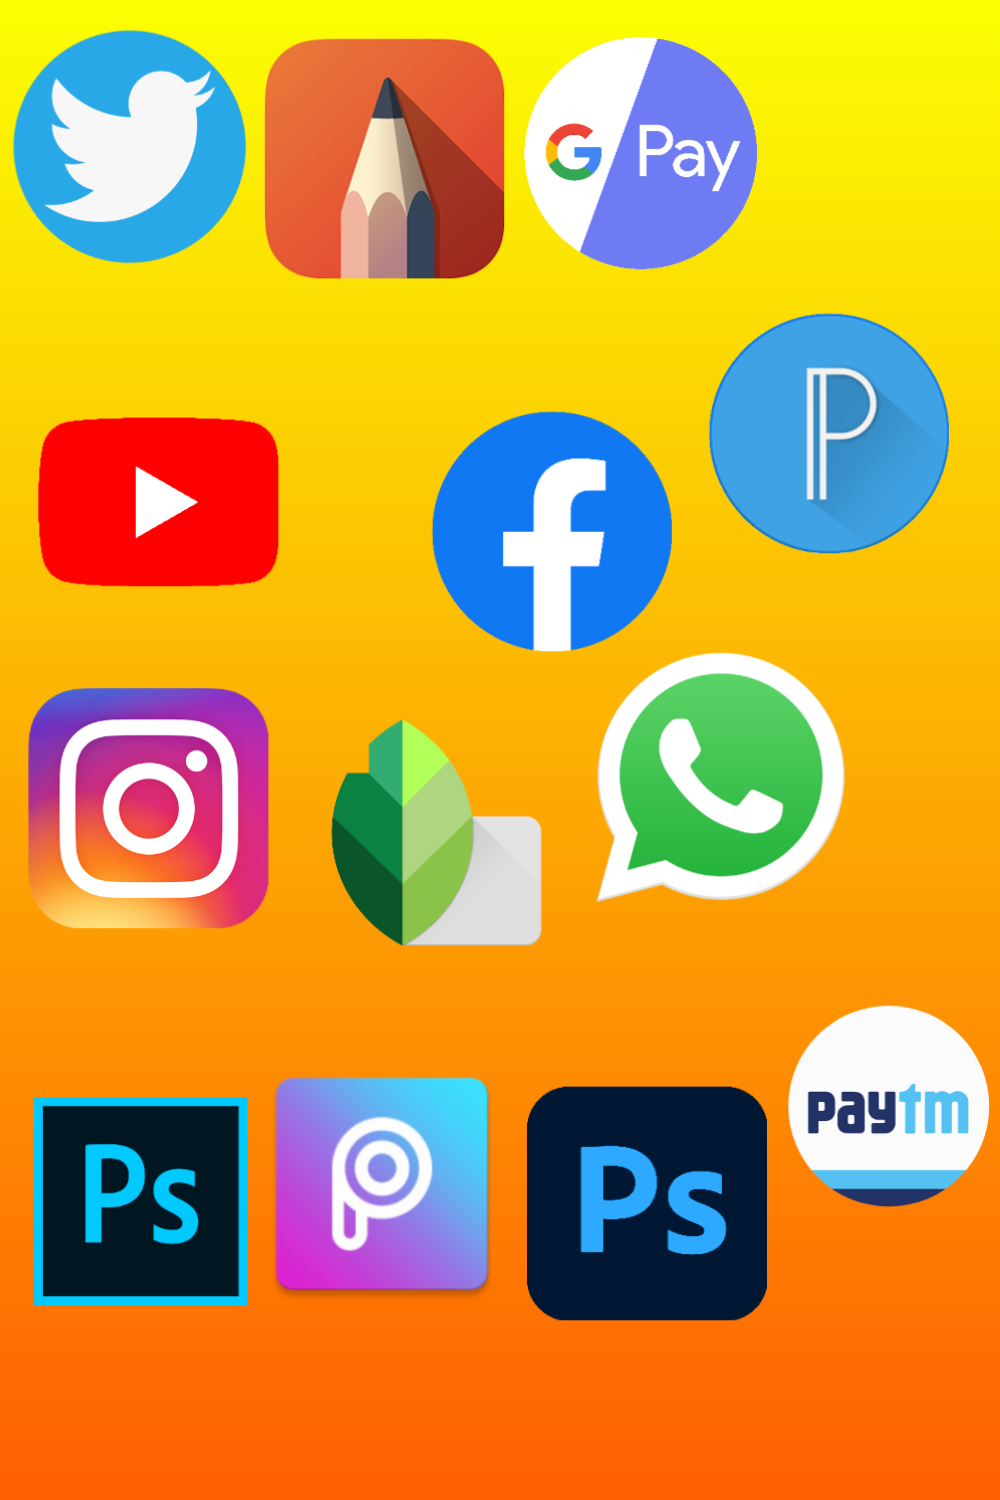 Sohala media apps logo , #instagram , #whatsapp , #snapsped, #photoshop, #facebook, #tweter, #PicsArt, #youtube & any apps pinterest preview image.